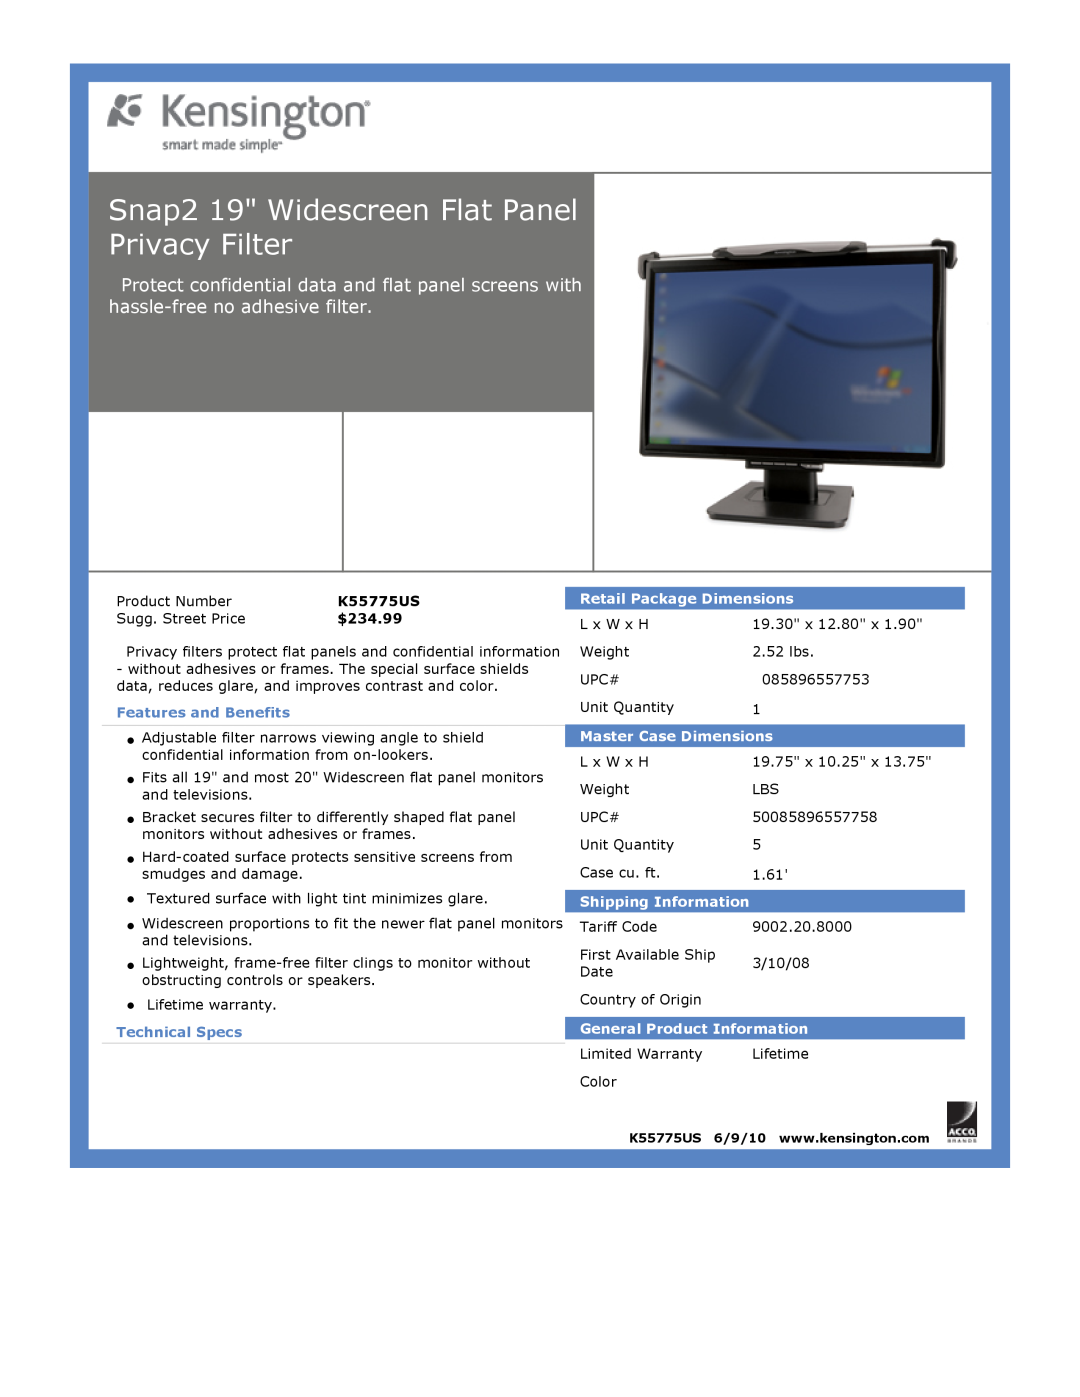 Kensington EU64325 Snap2 19 Widescreen Flat Panel Privacy Filter, $234.99, Features and Benefits, Technical Specs 